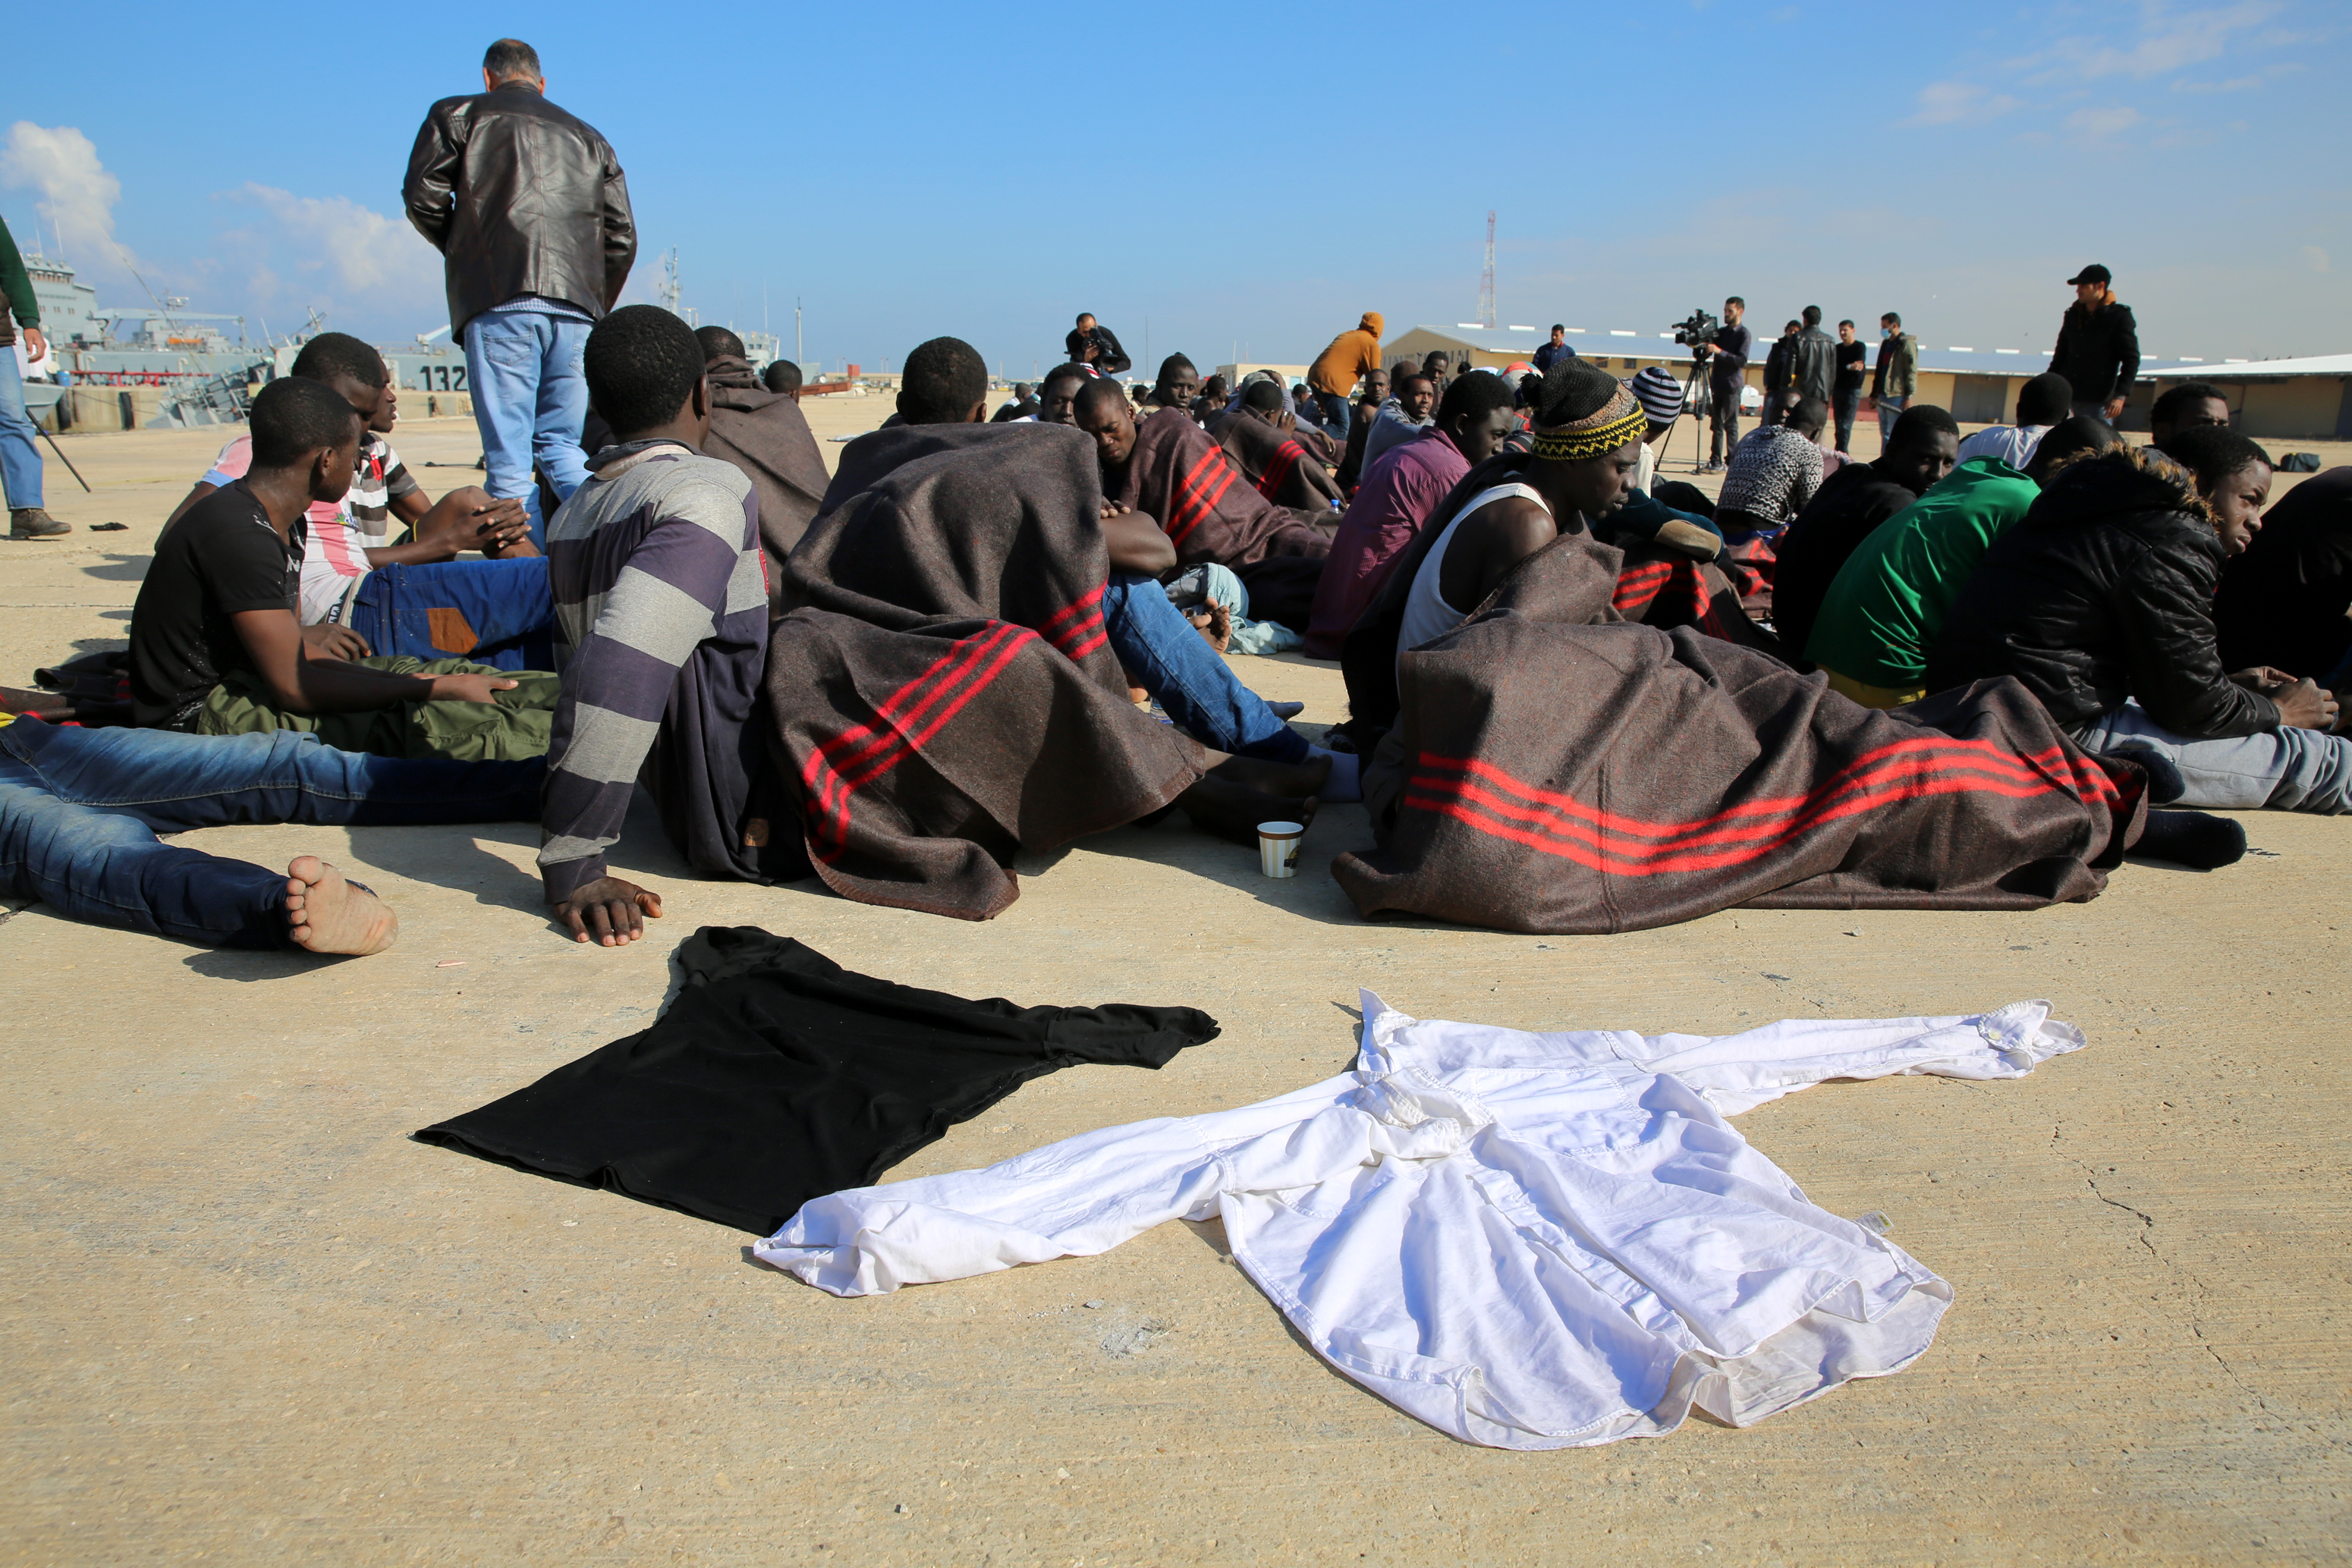 Illegal immigration: Libya to activate desert patrols